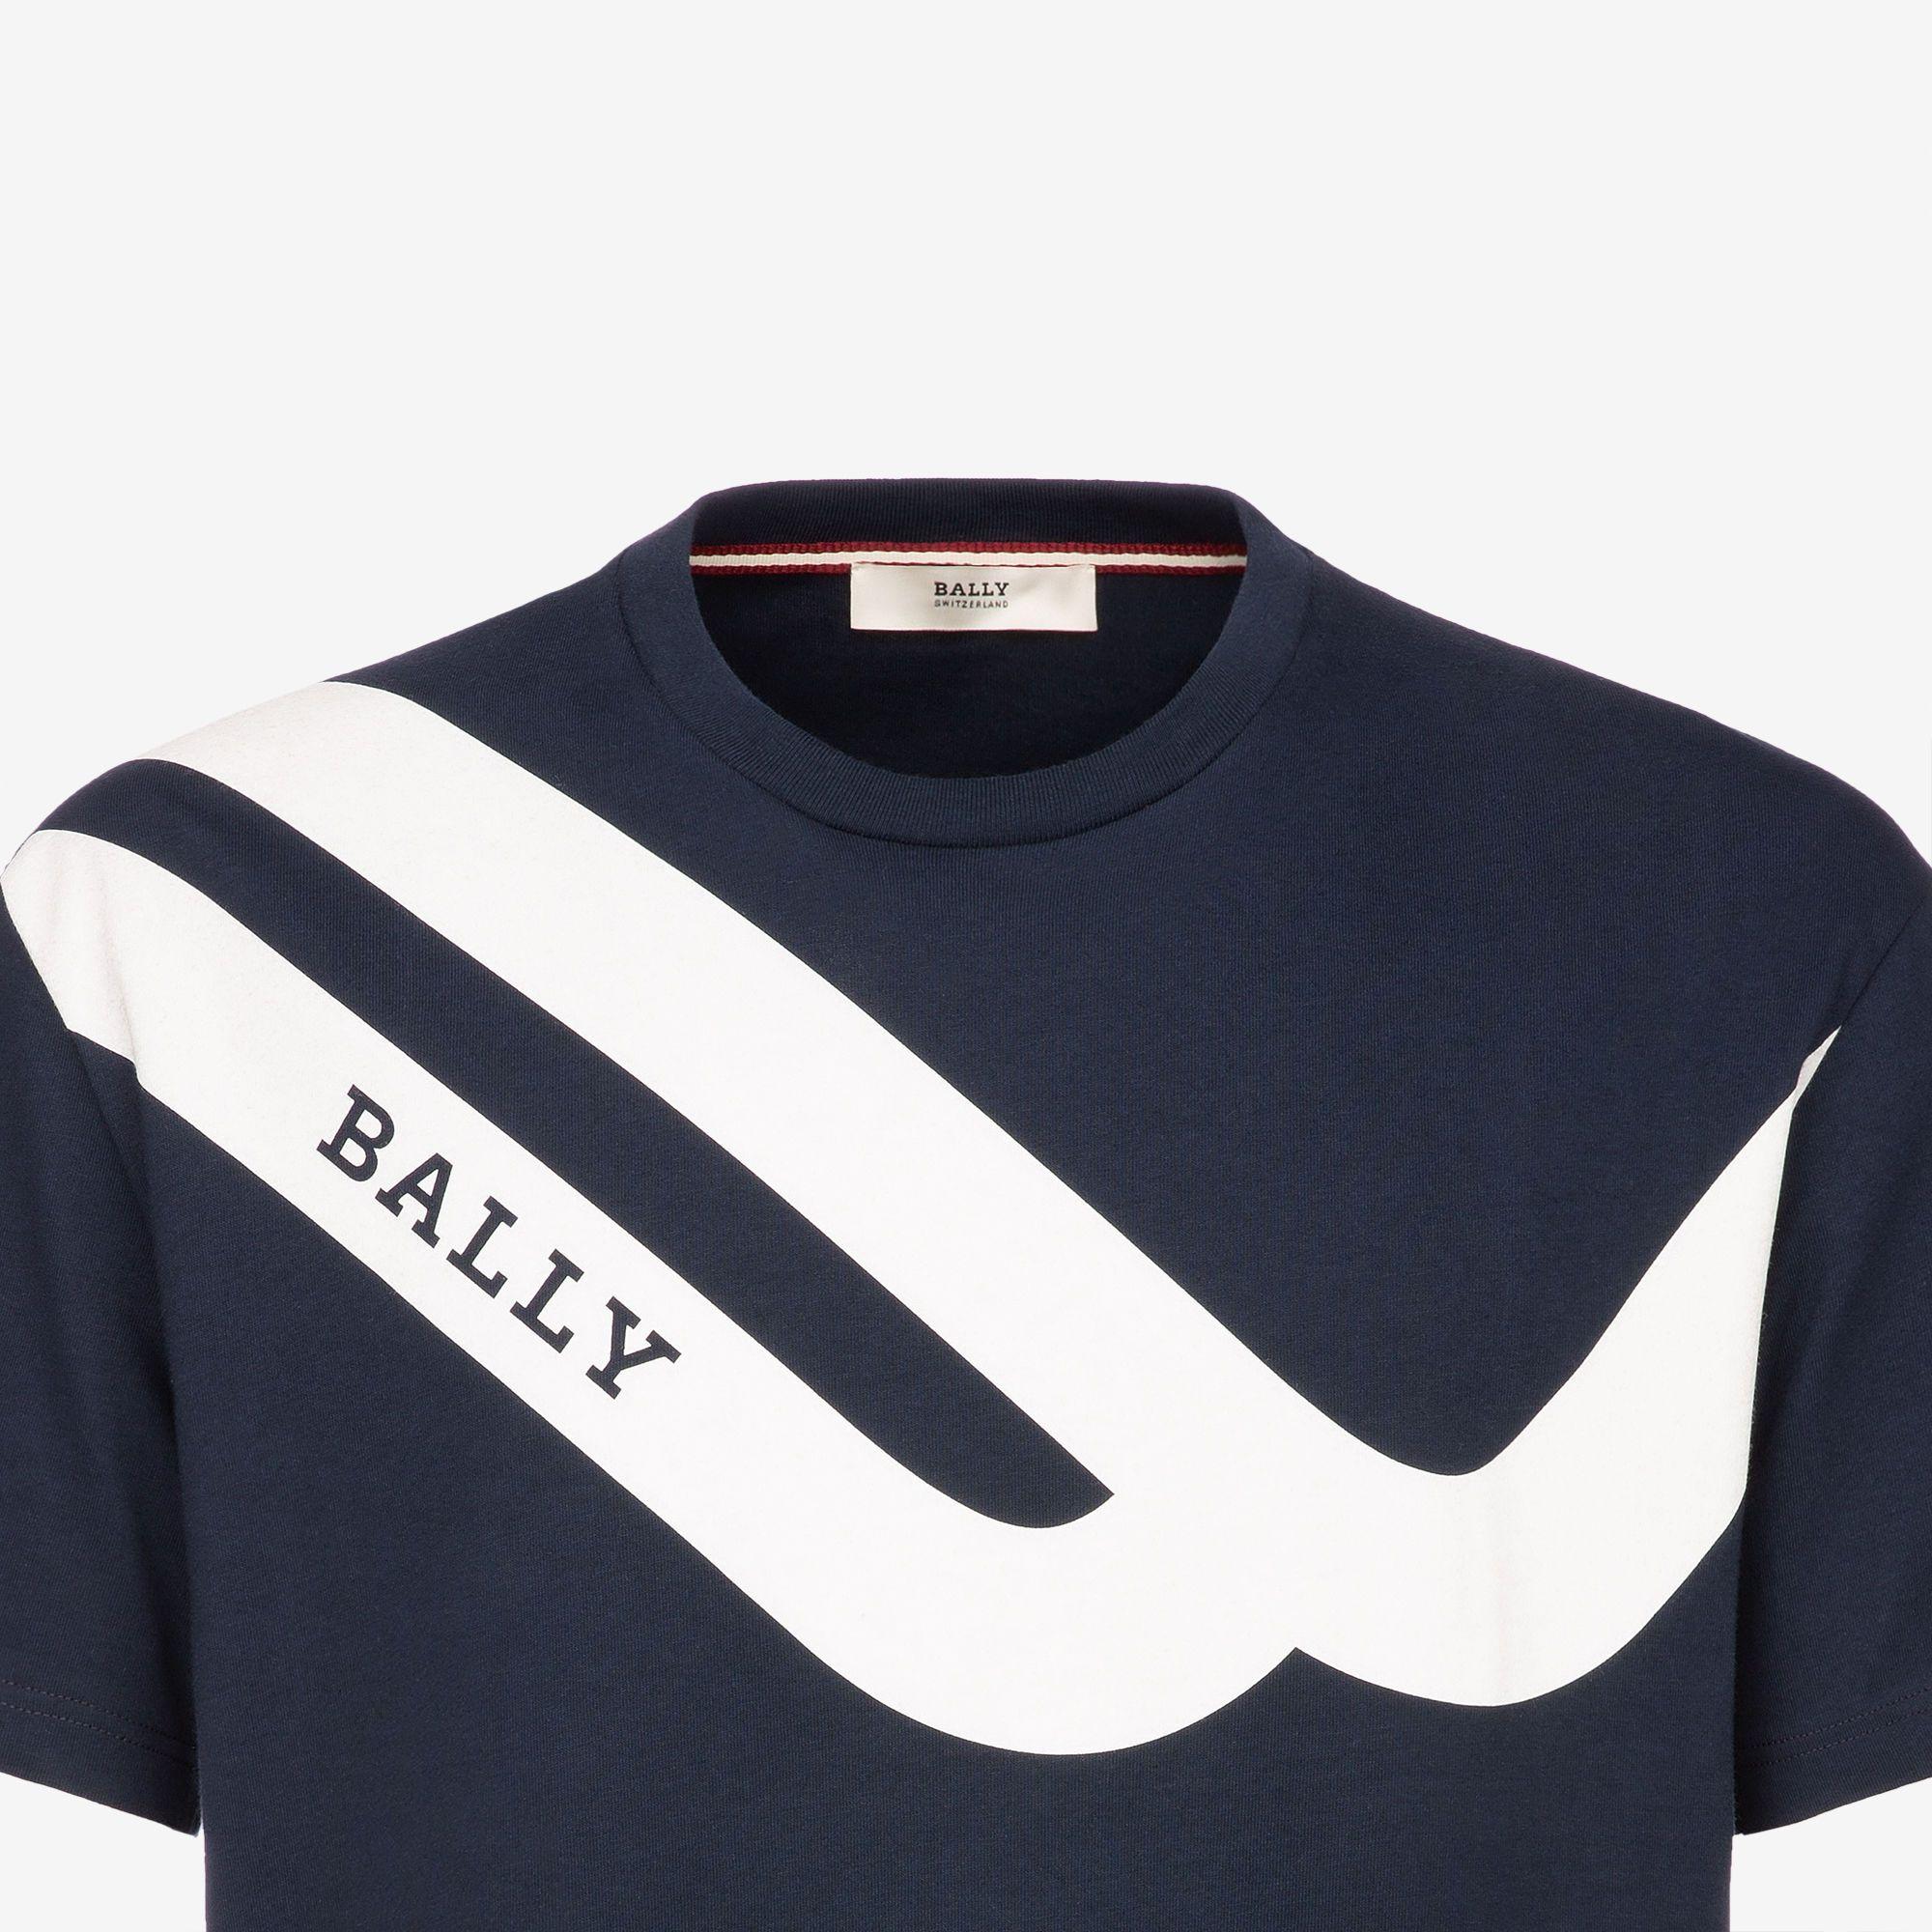 Bally Clothing Logo - Men's Designer Shirts & Tops